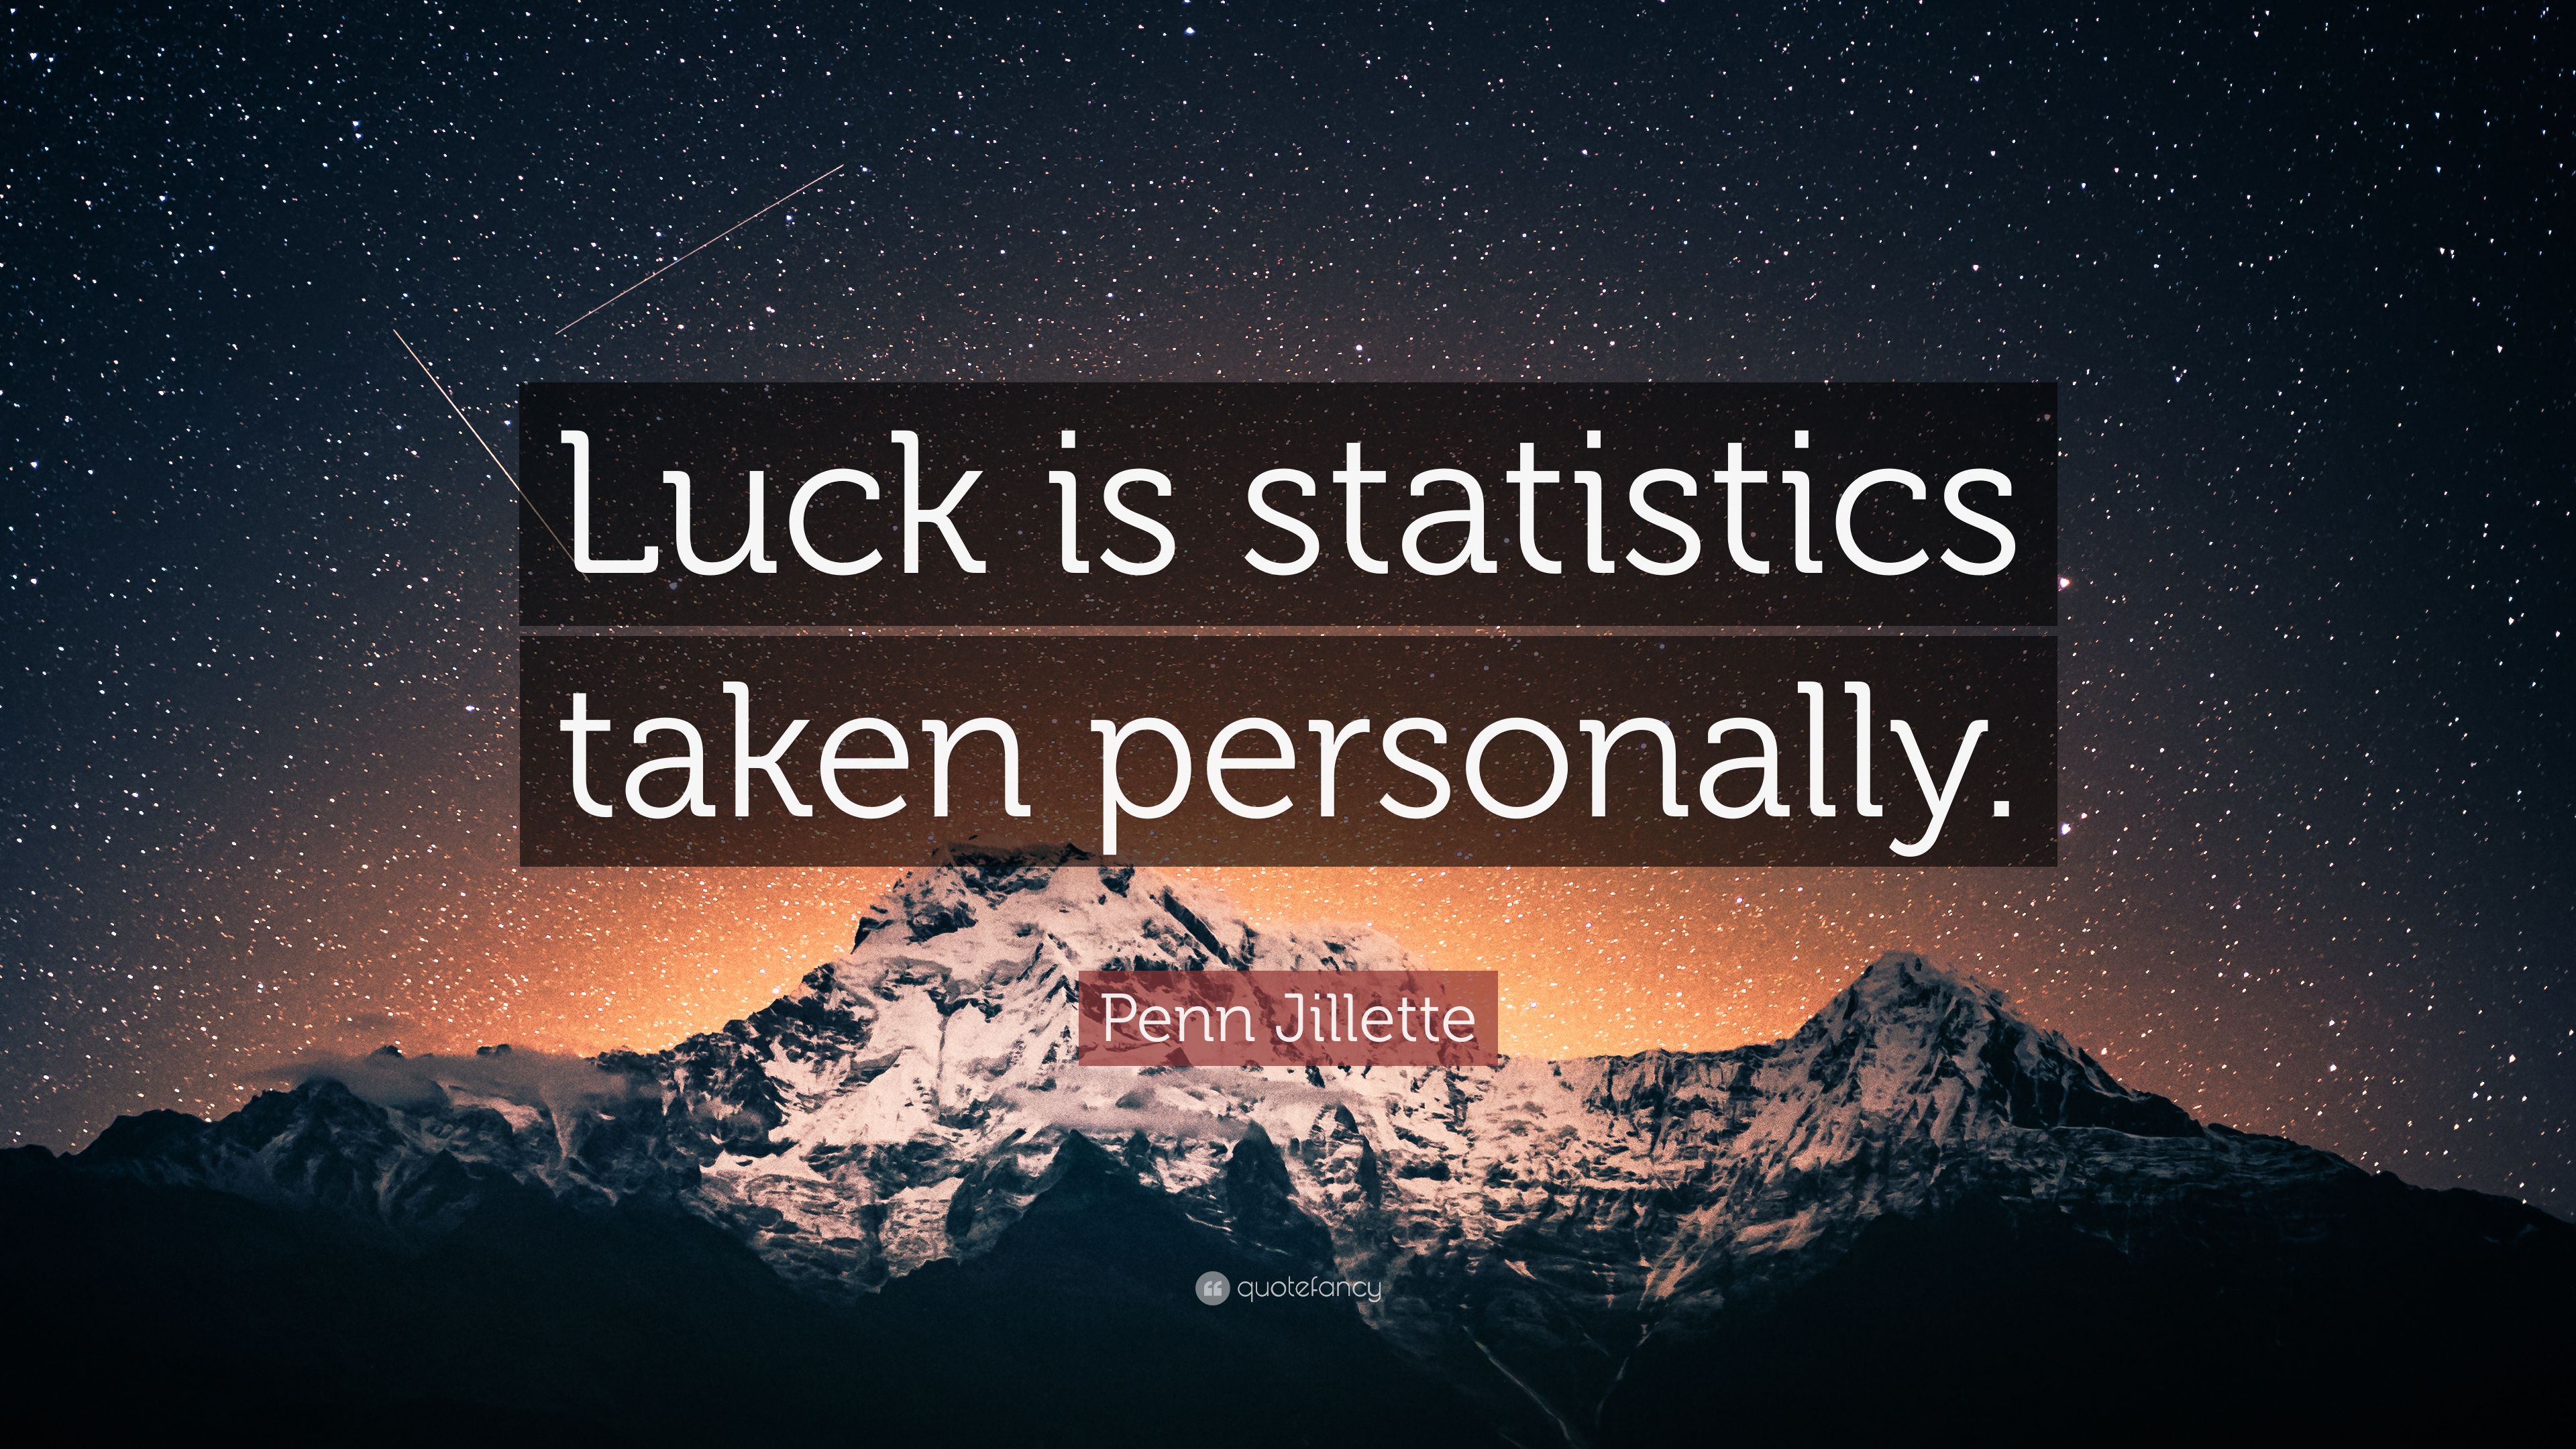 Penn Jillette Quote: “Luck is statistics taken personally.” 7